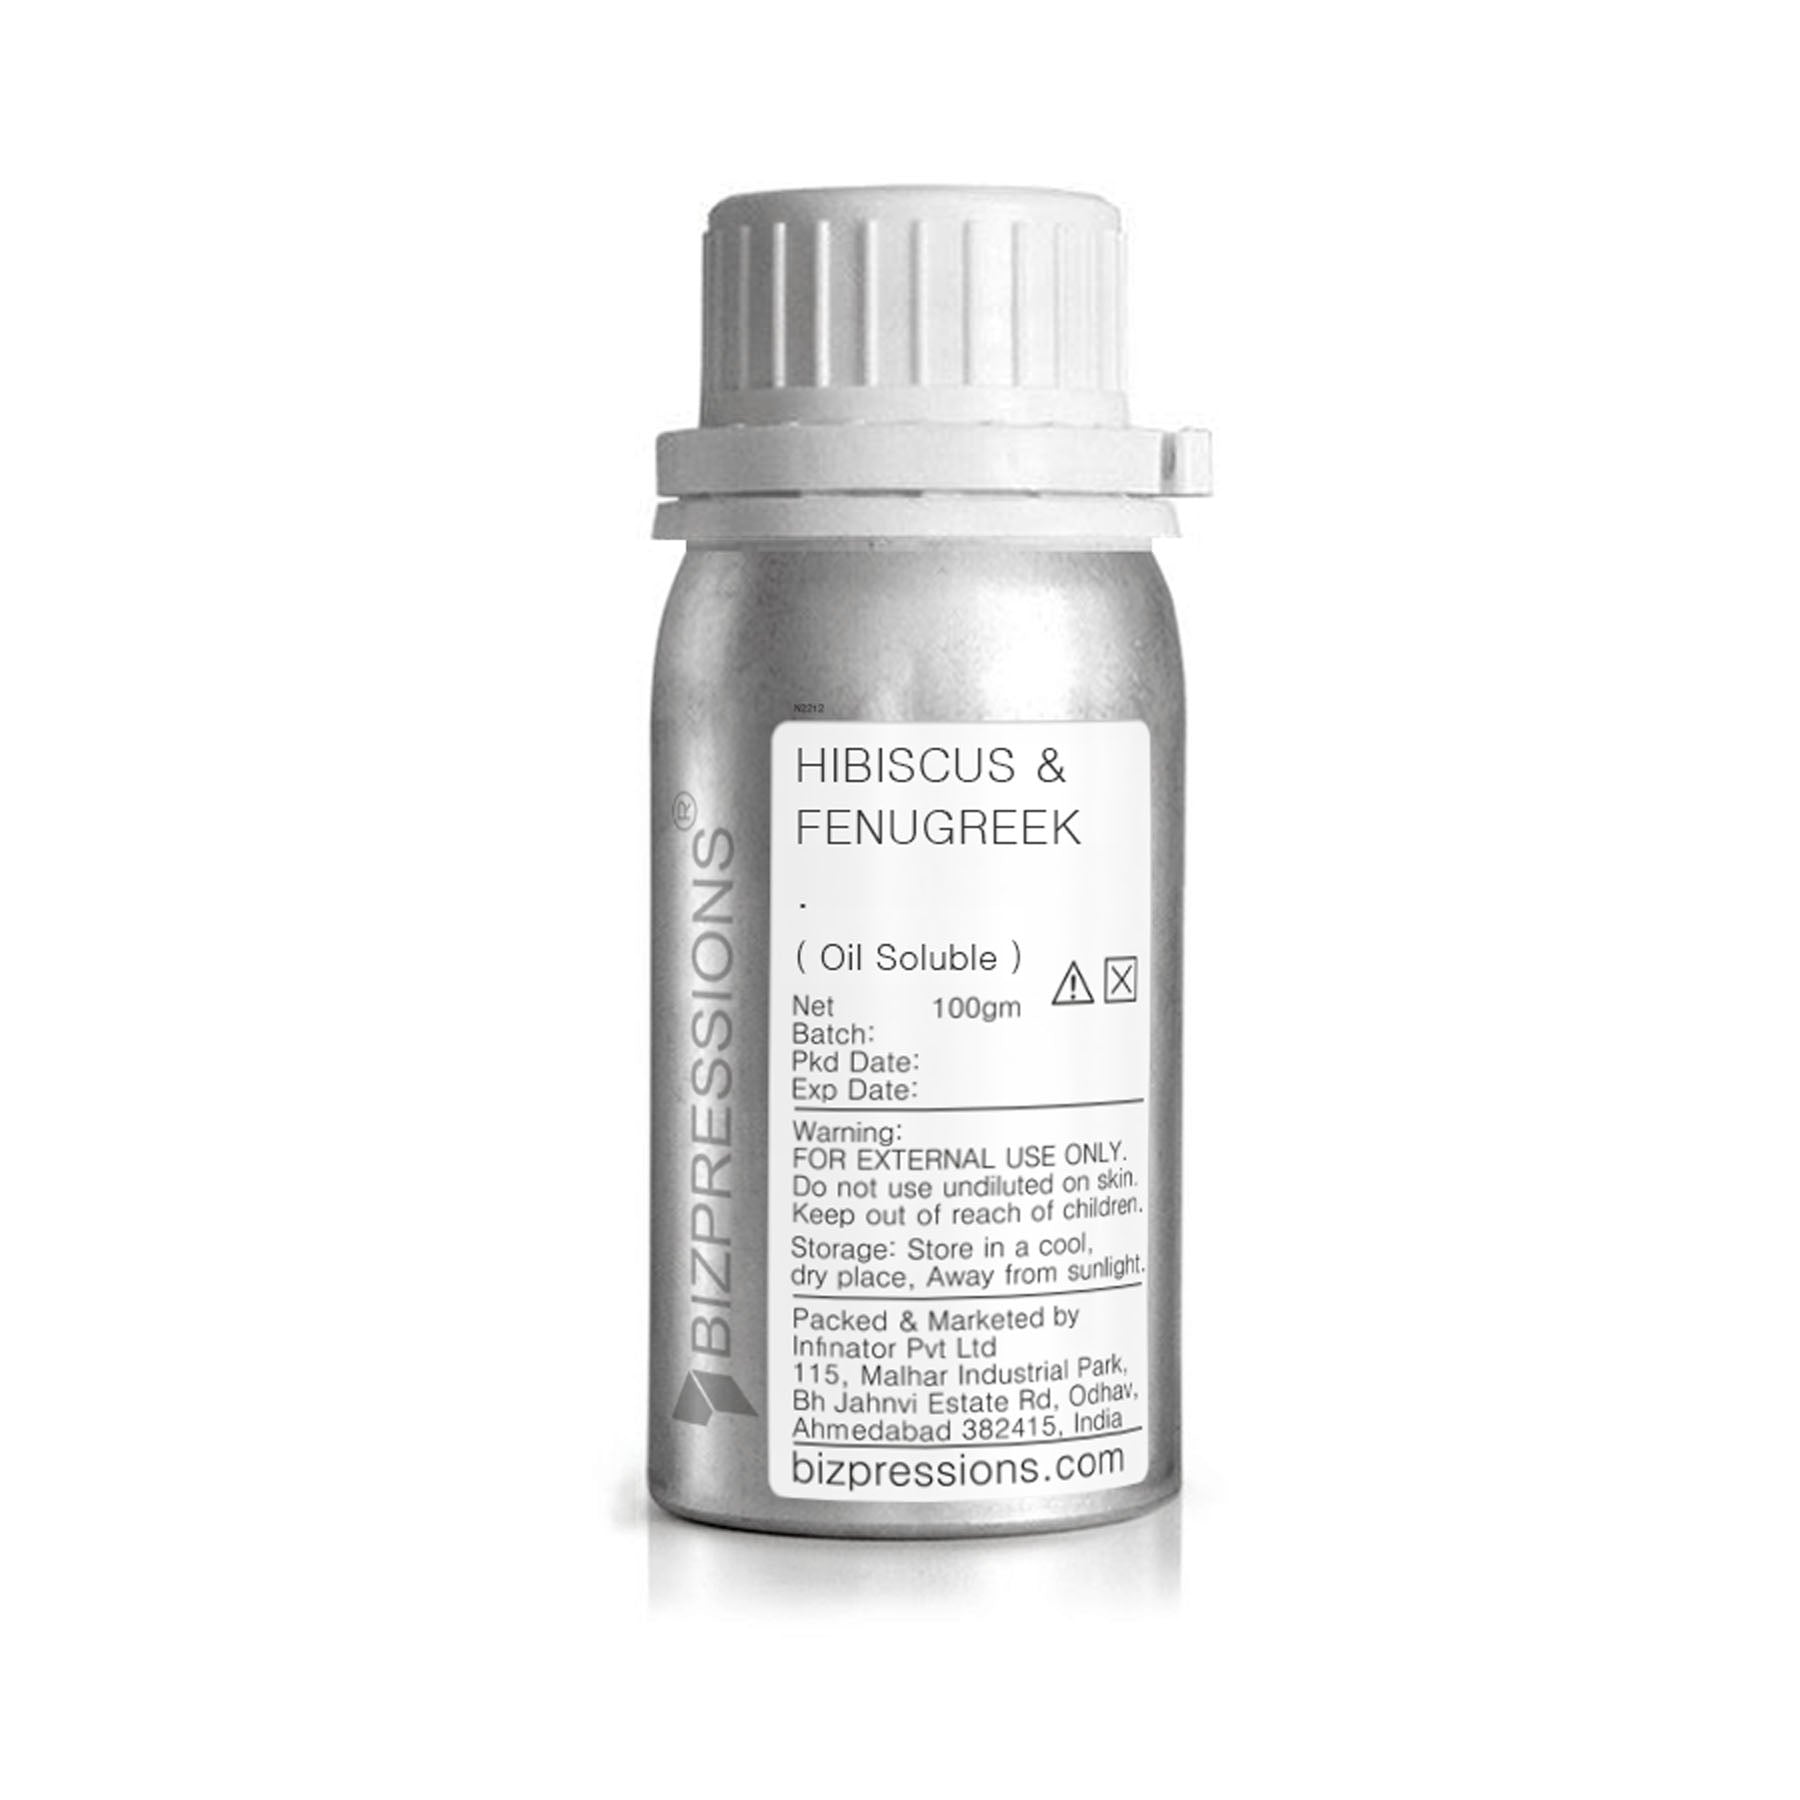 HIBISCUS & FENUGREEK - Fragrance ( Oil Soluble ) - 100 gm